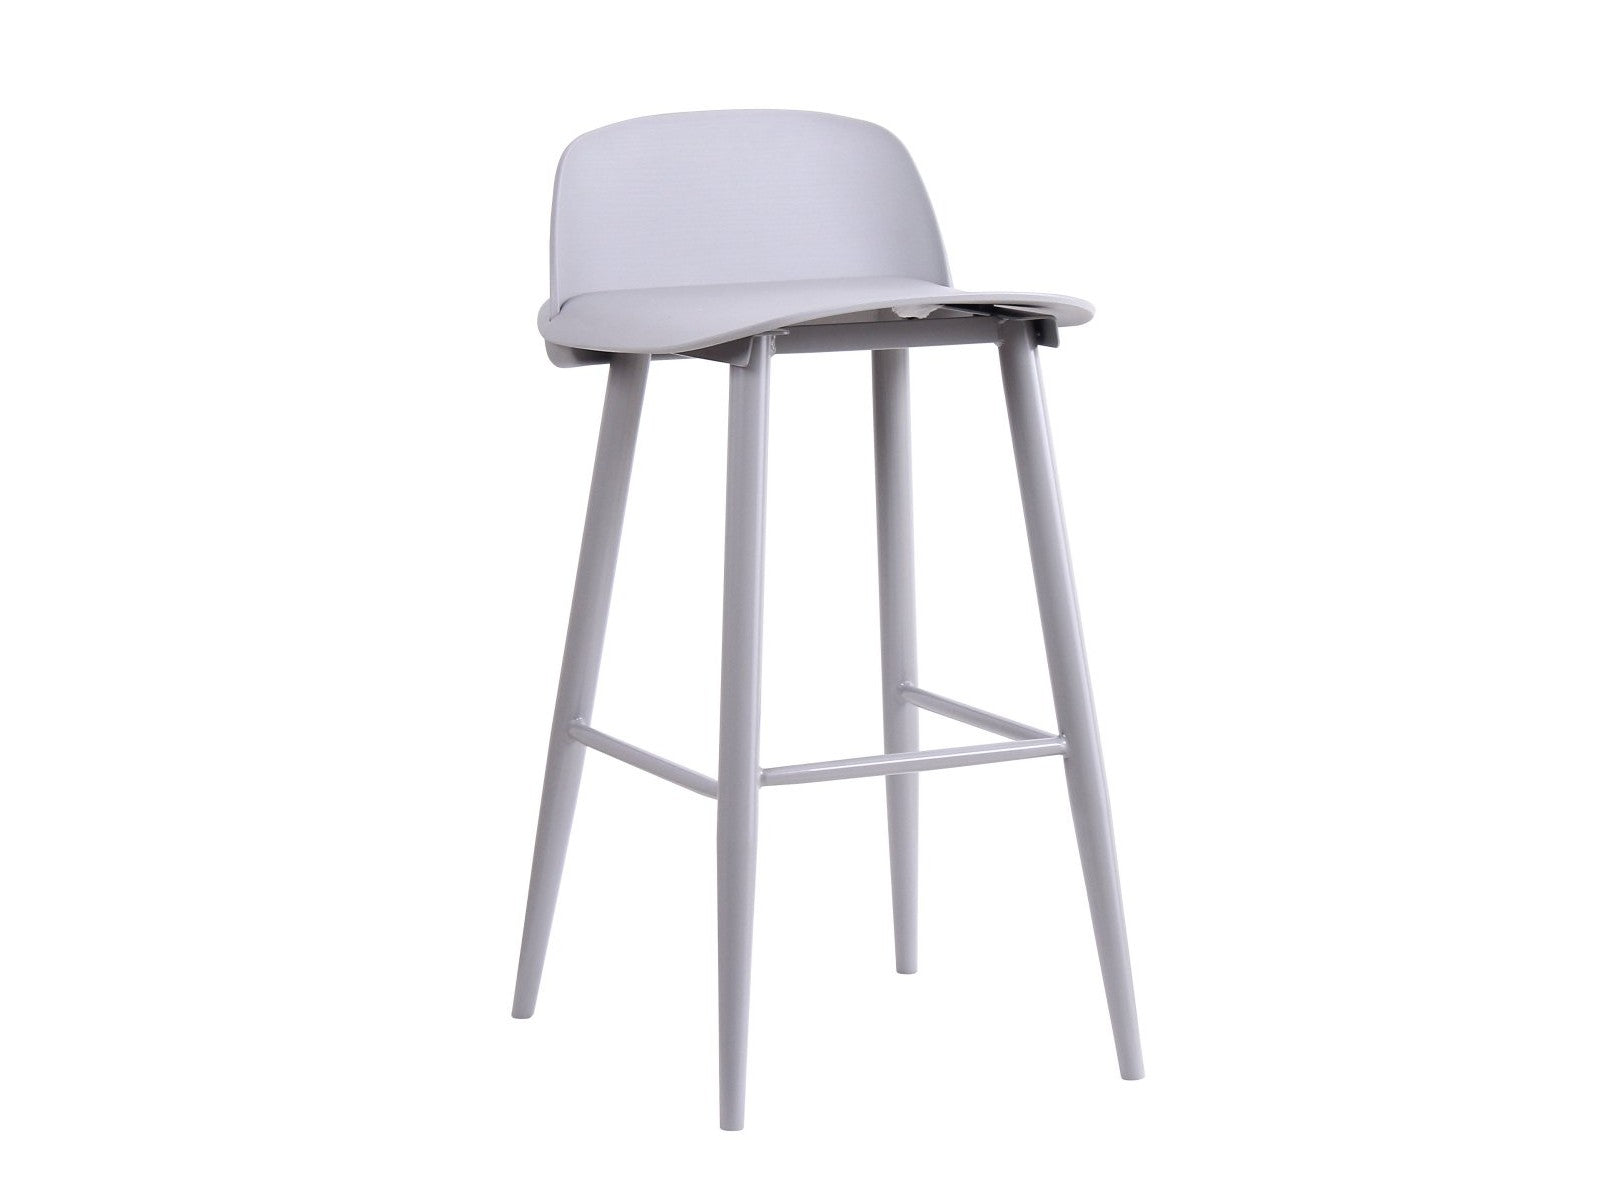 Nerd metal and polypropylene grey bar - kitchen chair